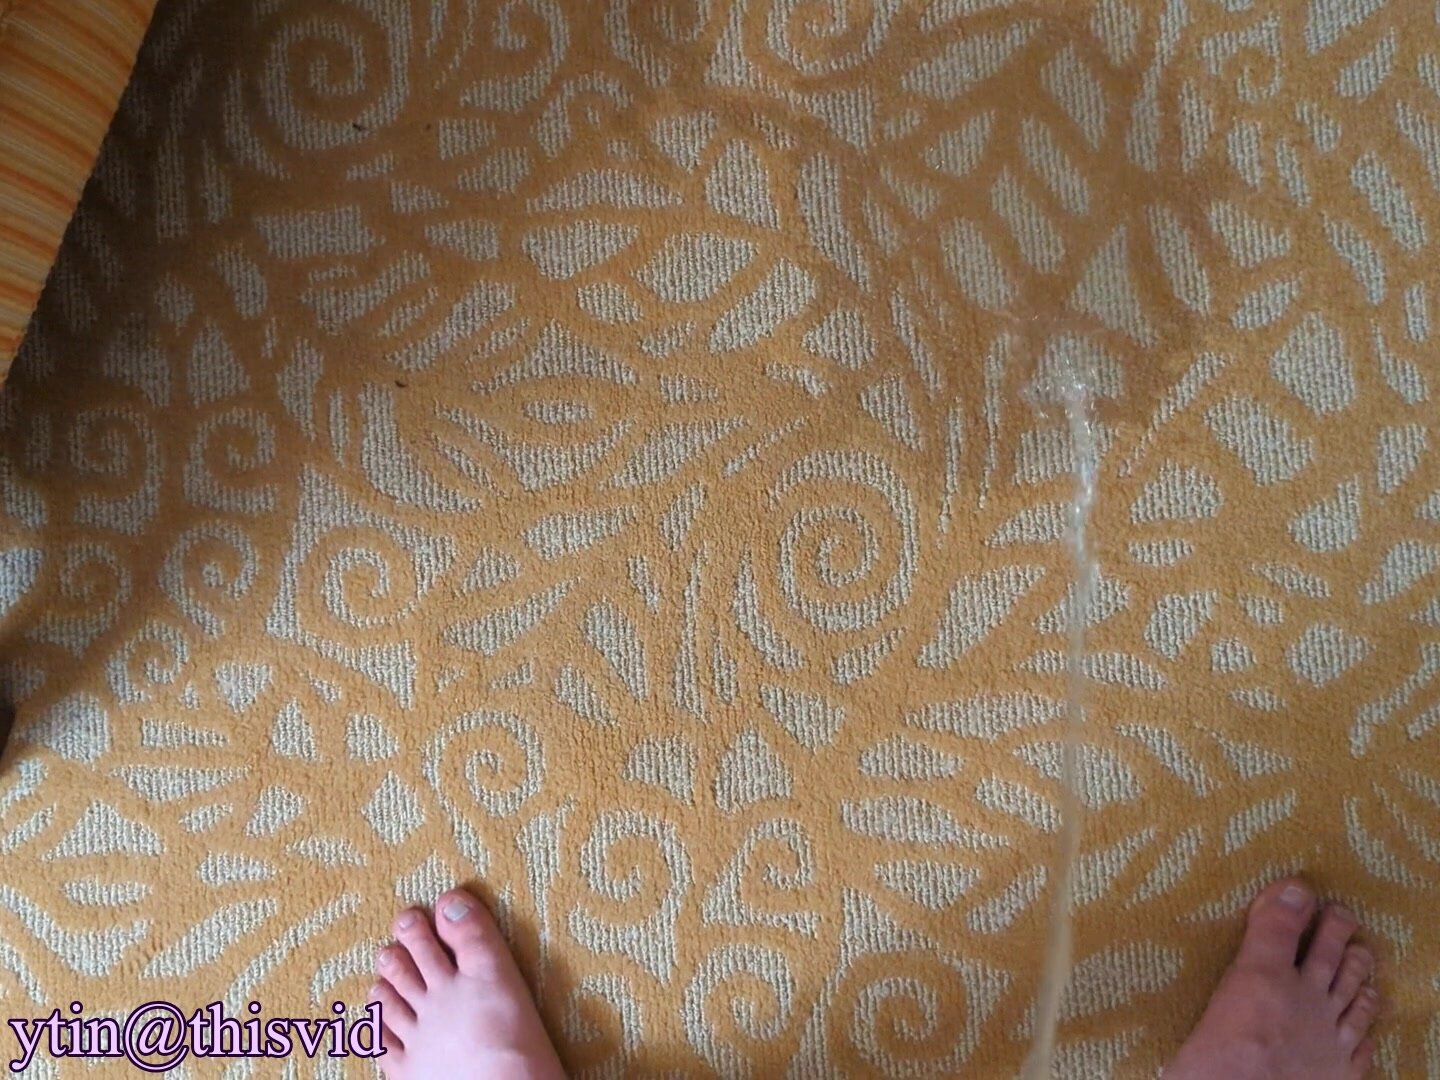 Hotel Big Puddle on Carpet